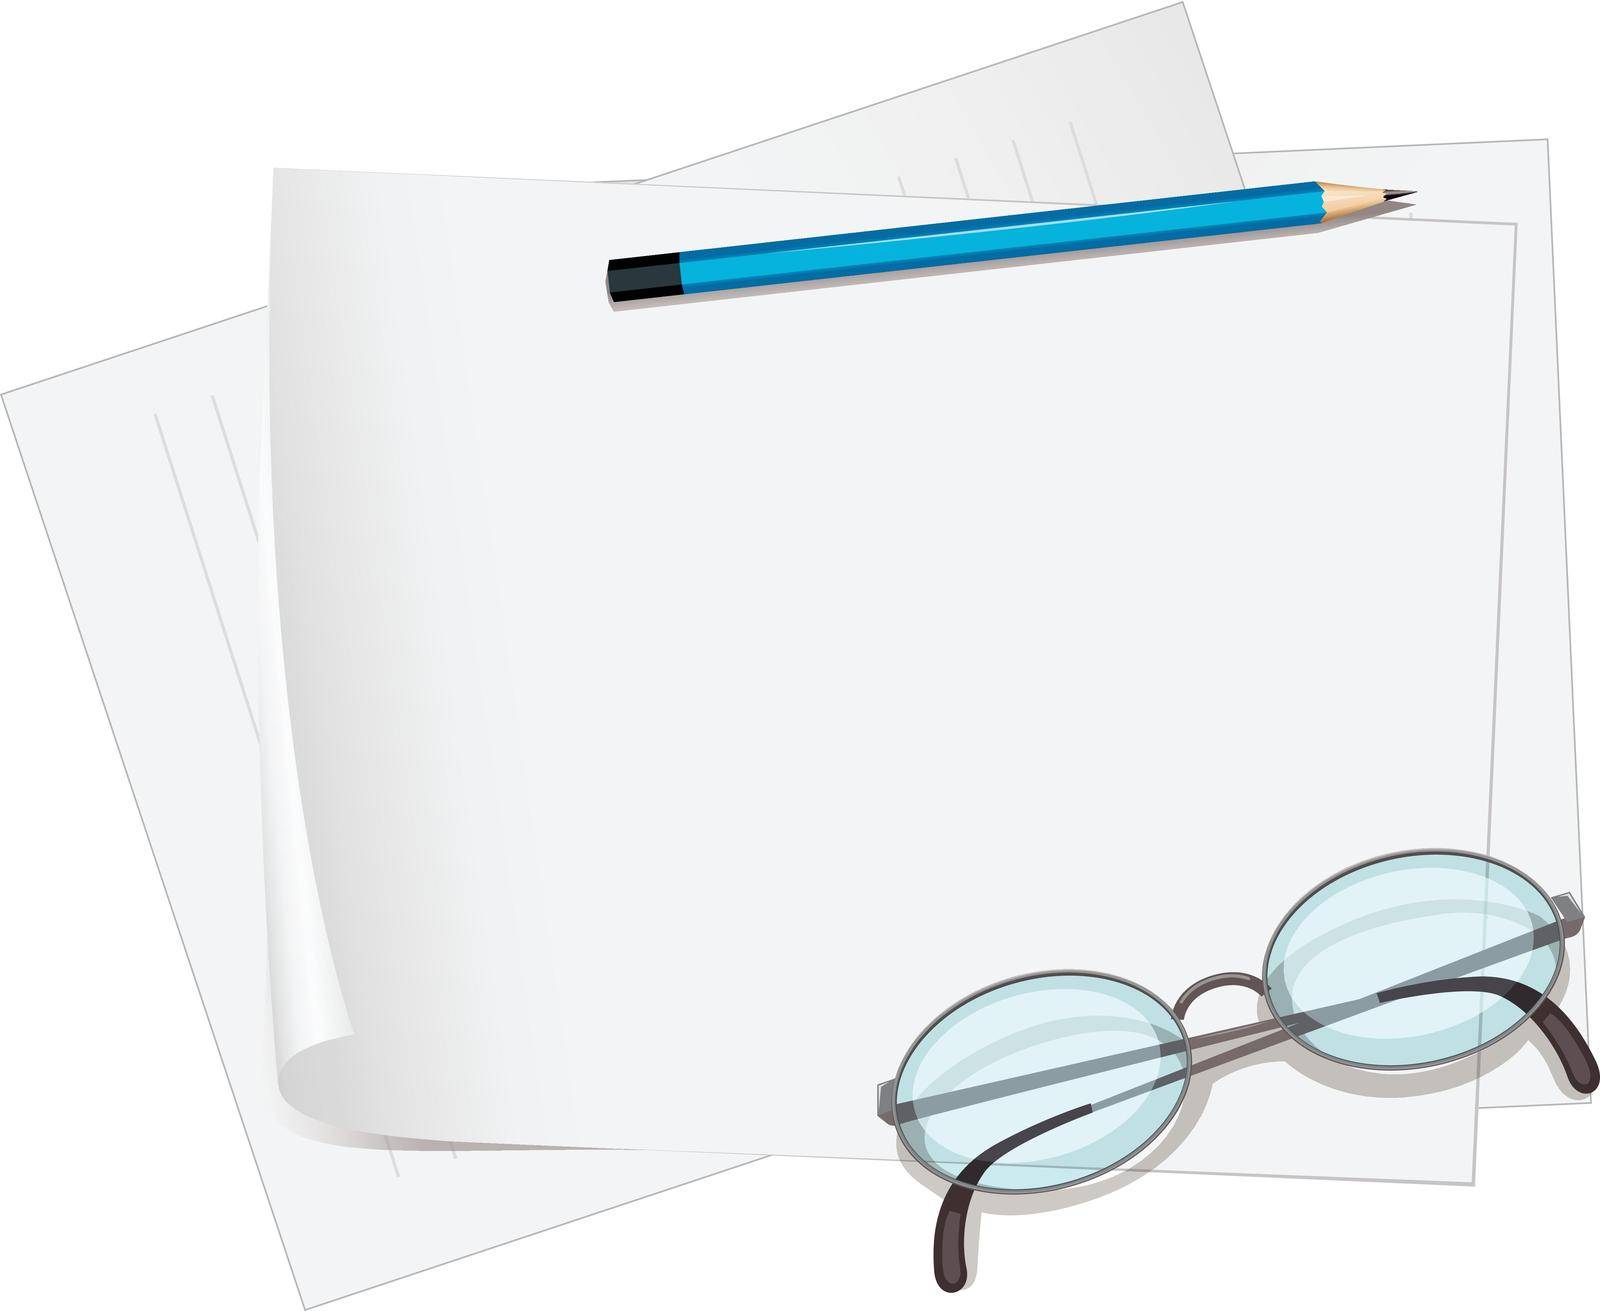 Illustration of glasses and paper on white